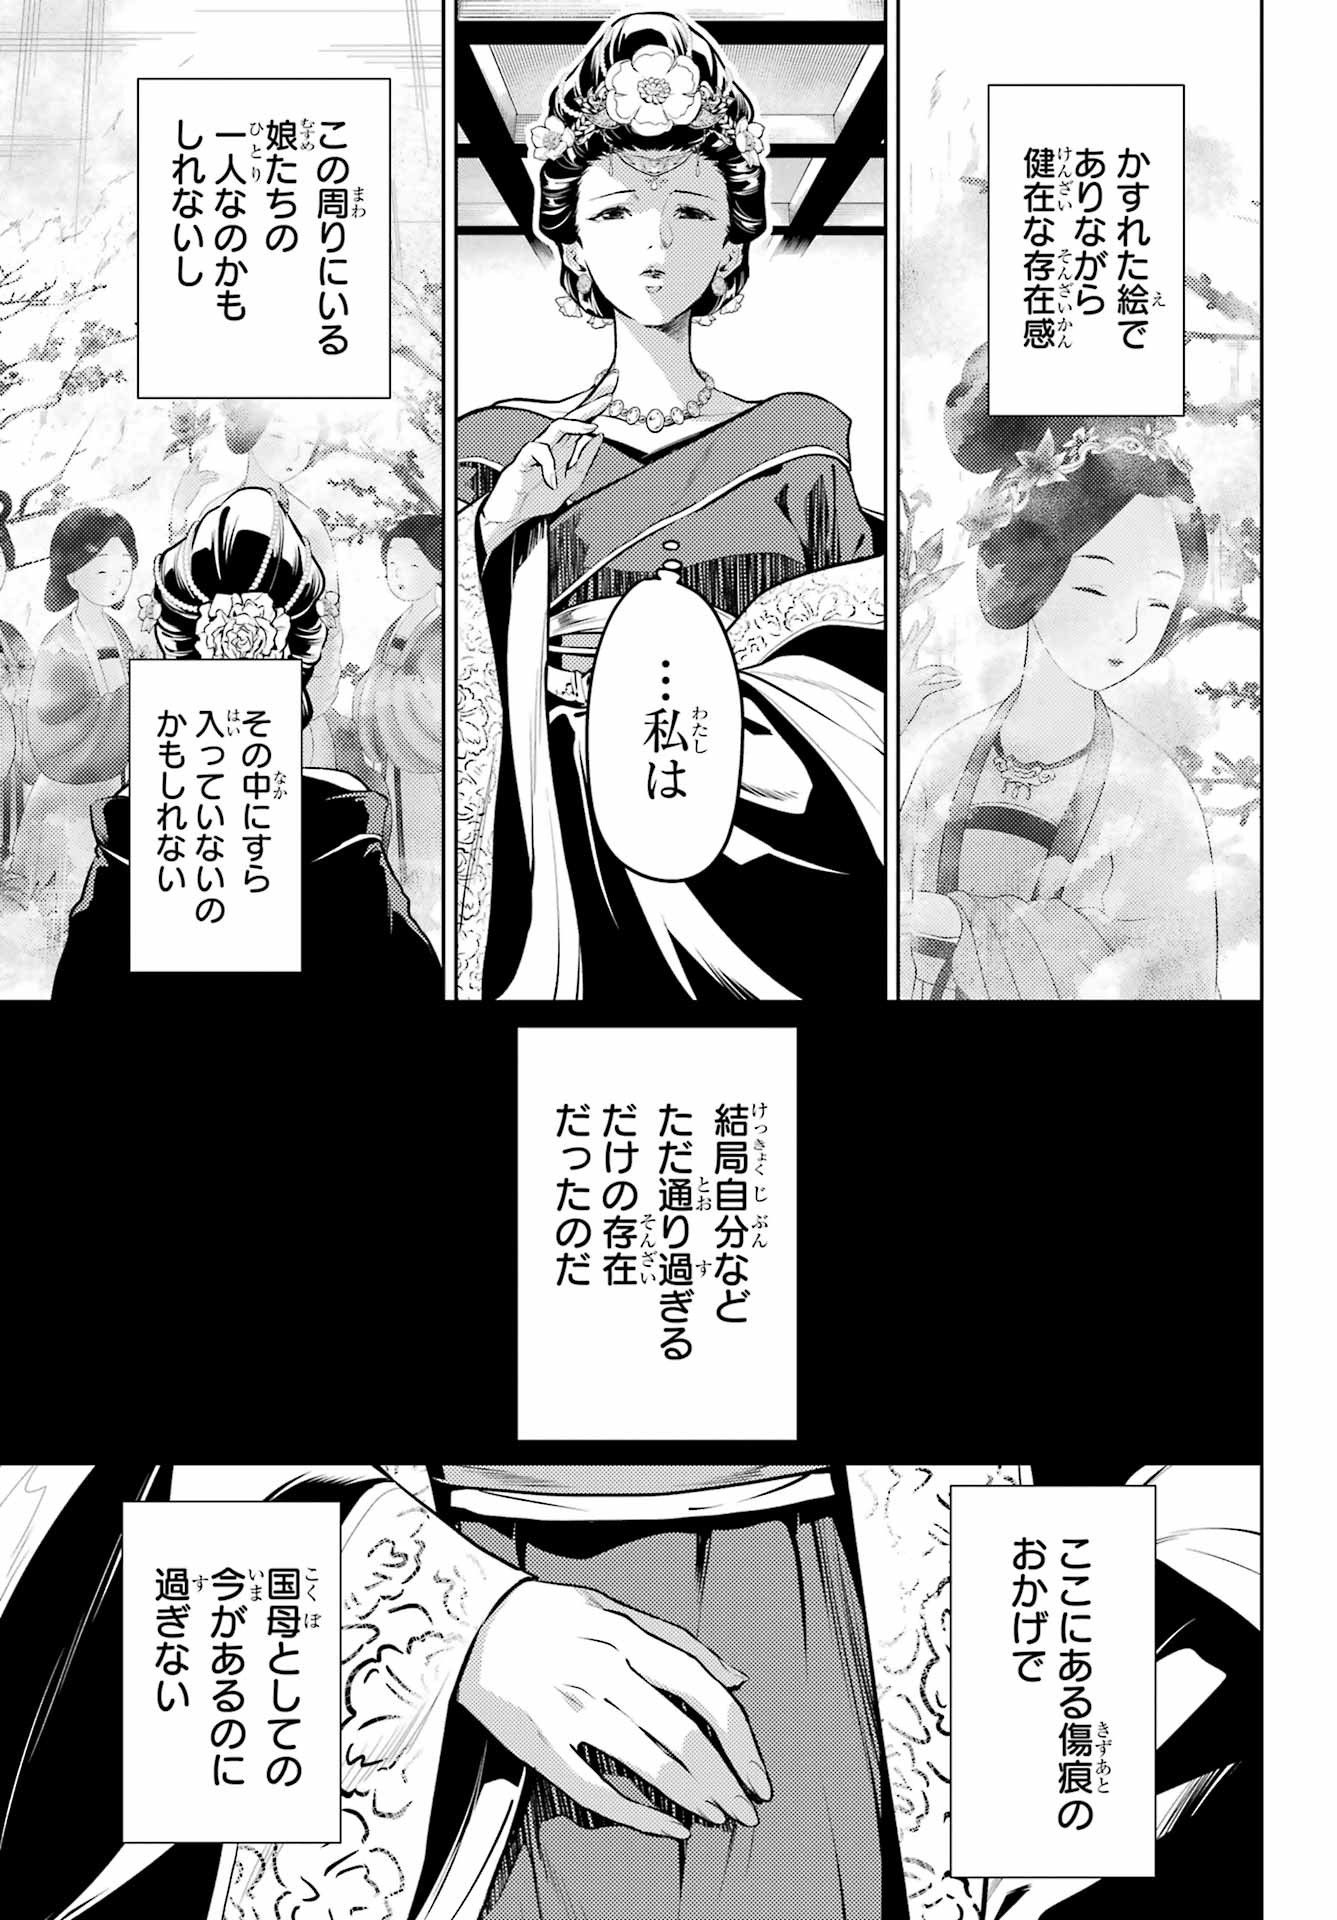 Kusuriya no Hitorigoto - Chapter 58 - Page 3